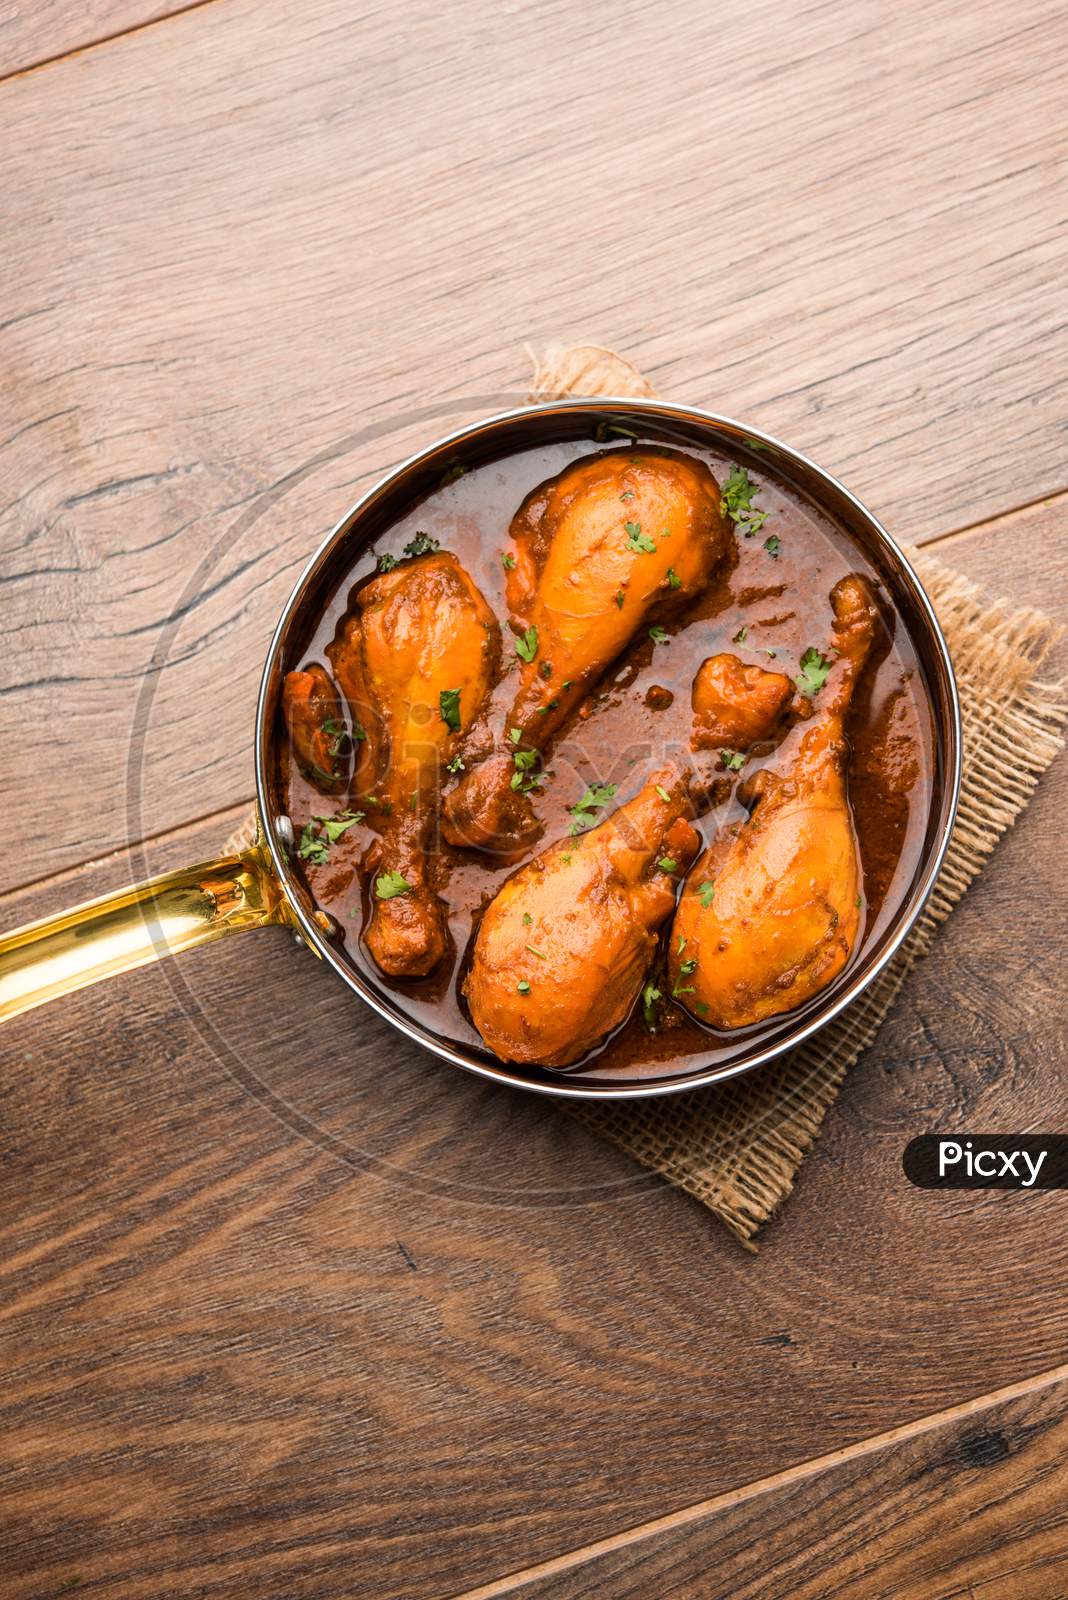 Chicken tangdi/tangri masala or chicken drumstick/leg curry